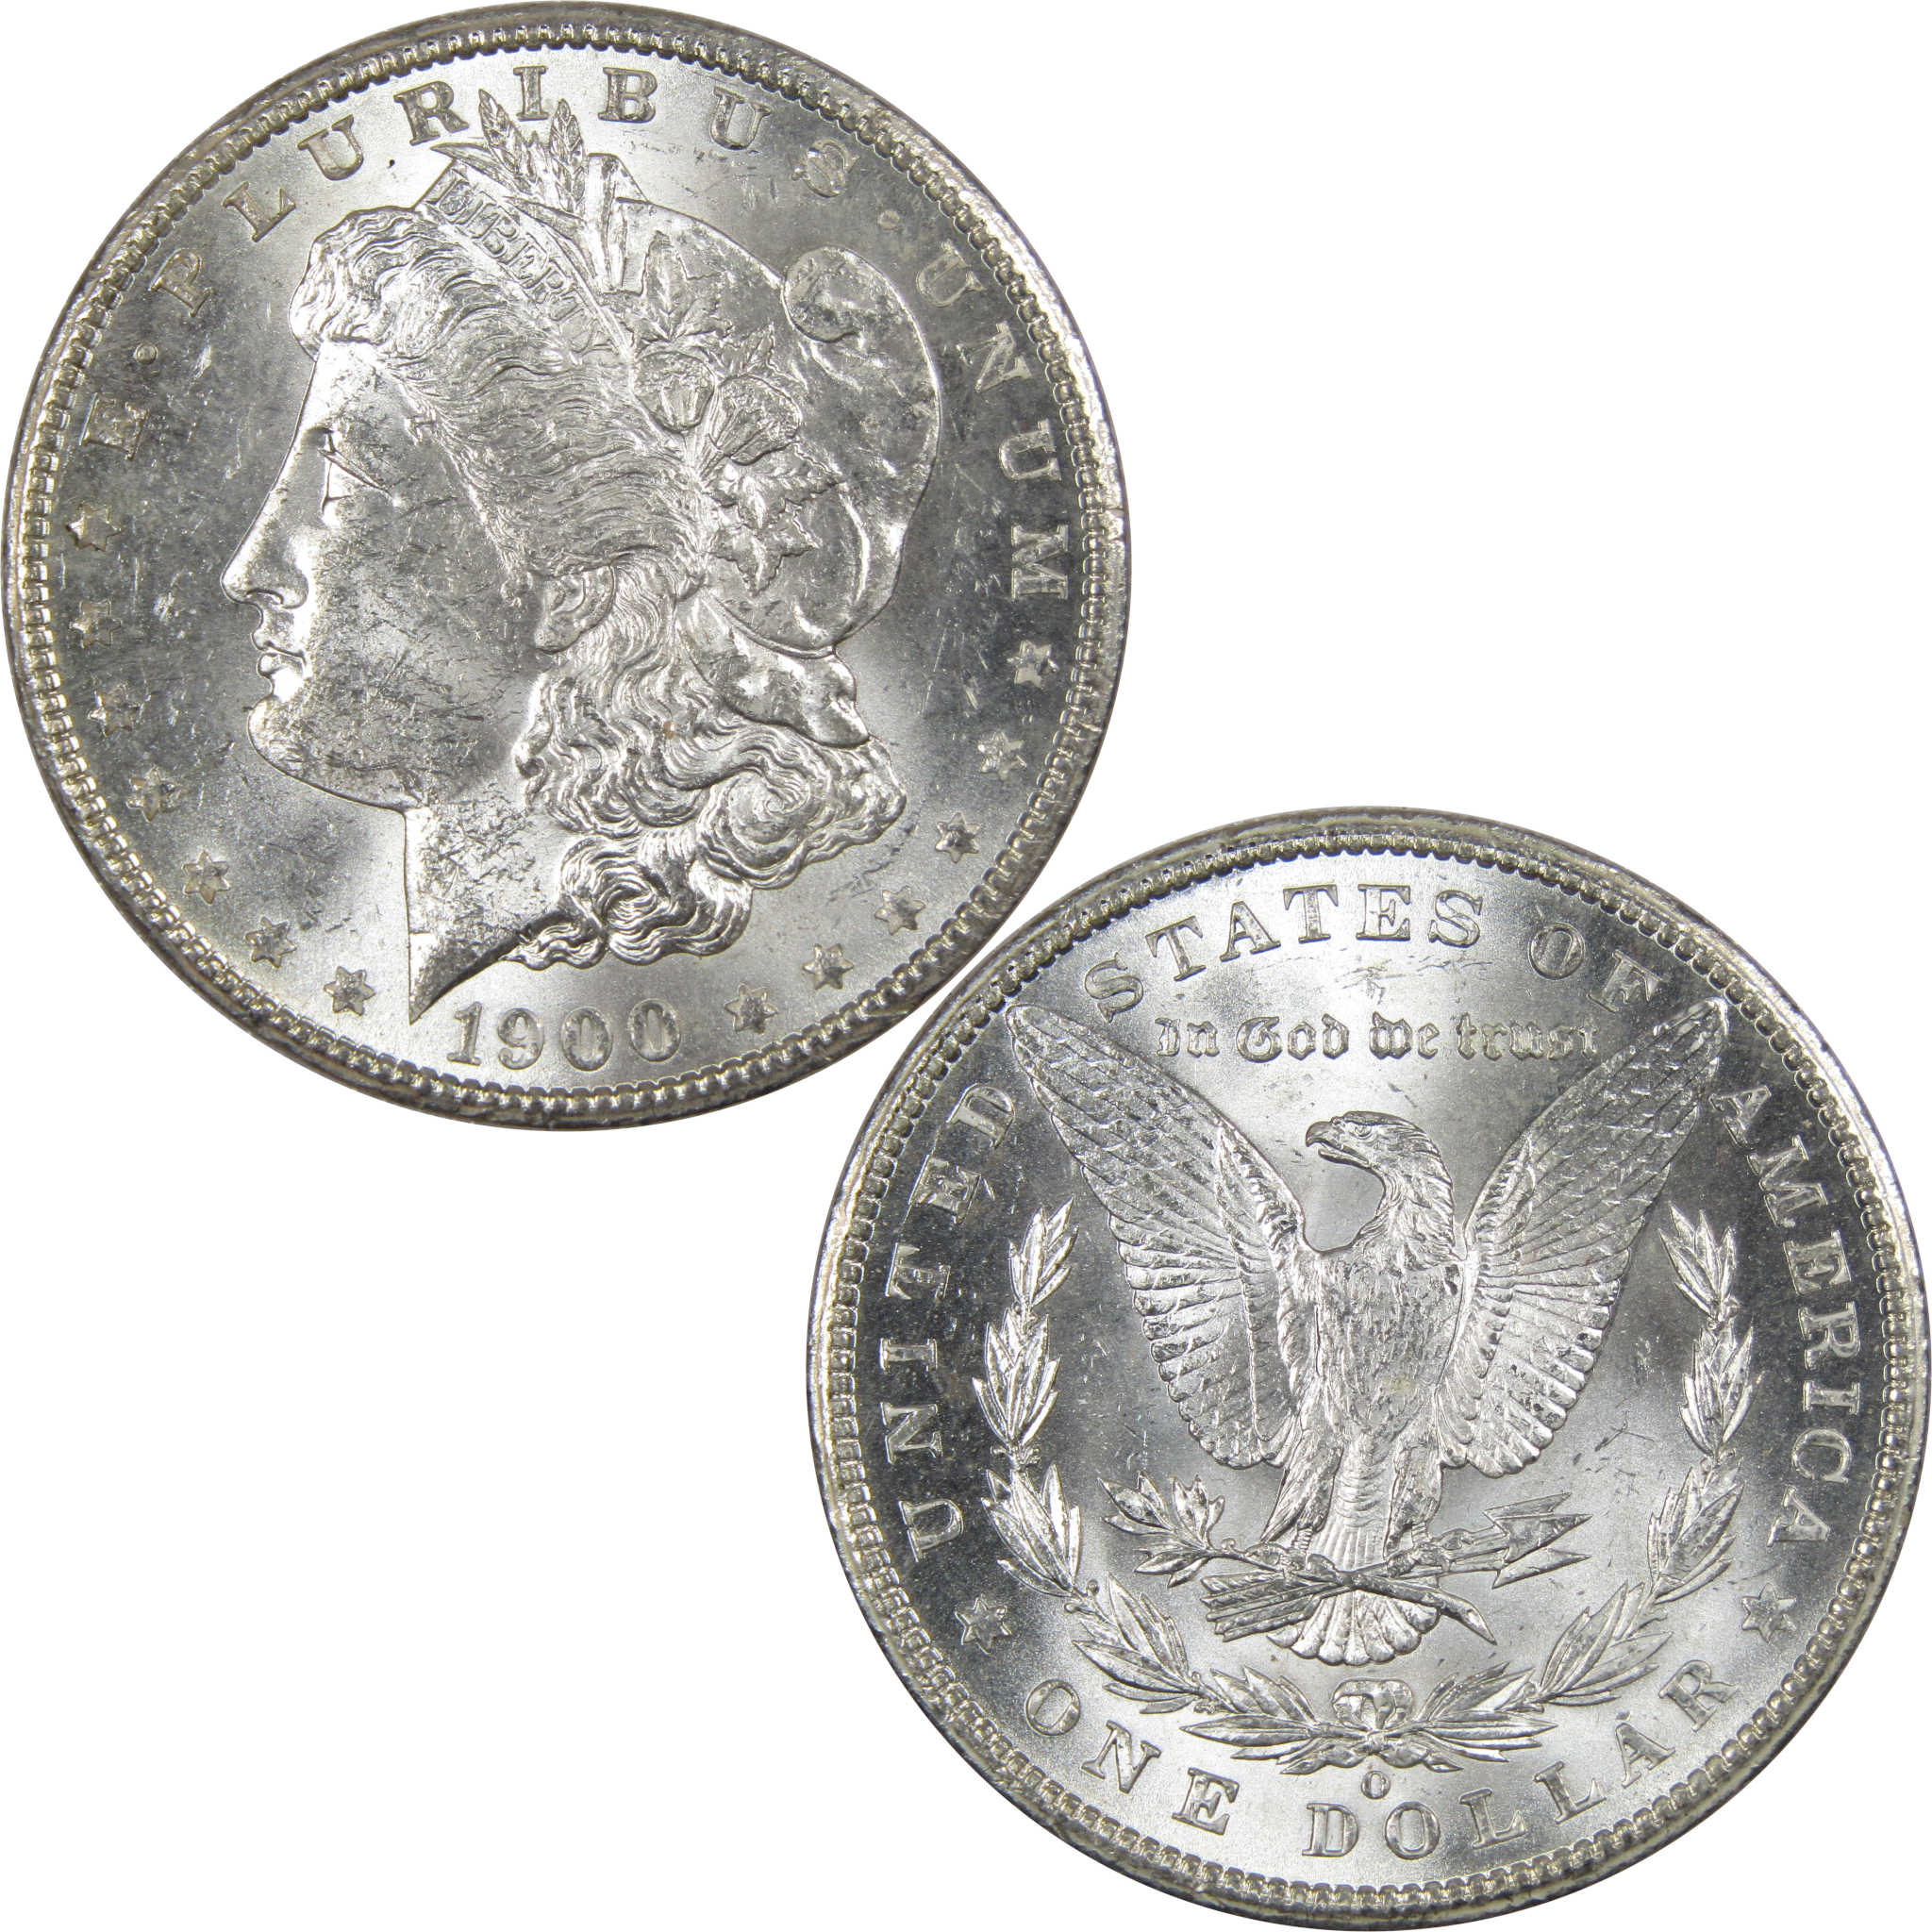 1900 O Morgan Dollar BU Uncirculated Mint State 90% Silver SKU:IPC9793 - Morgan coin - Morgan silver dollar - Morgan silver dollar for sale - Profile Coins &amp; Collectibles